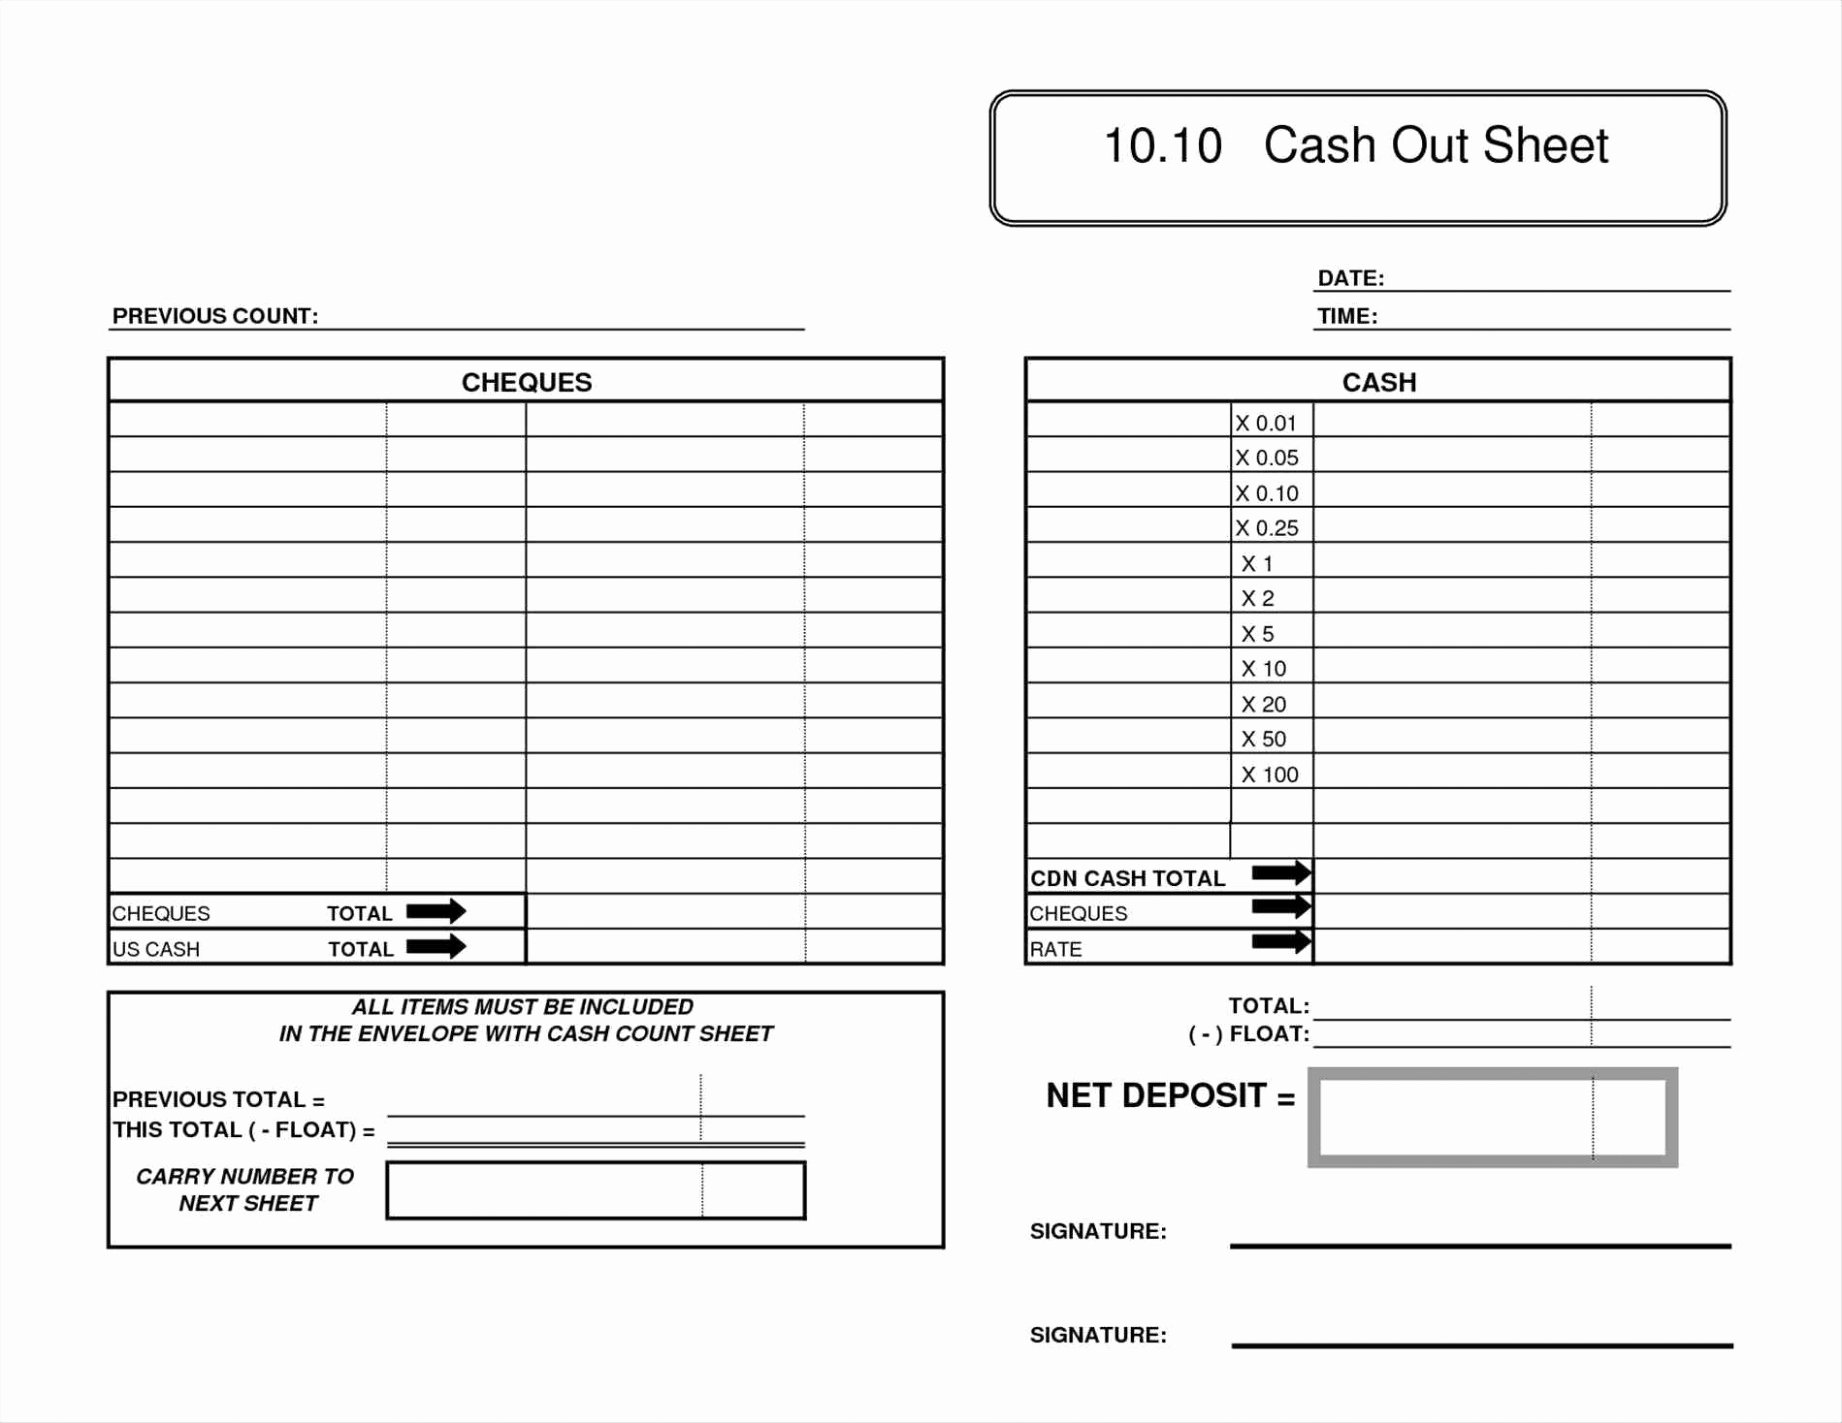 Download now Sheet Cash Drawer Chest Drawers Balance Sheet